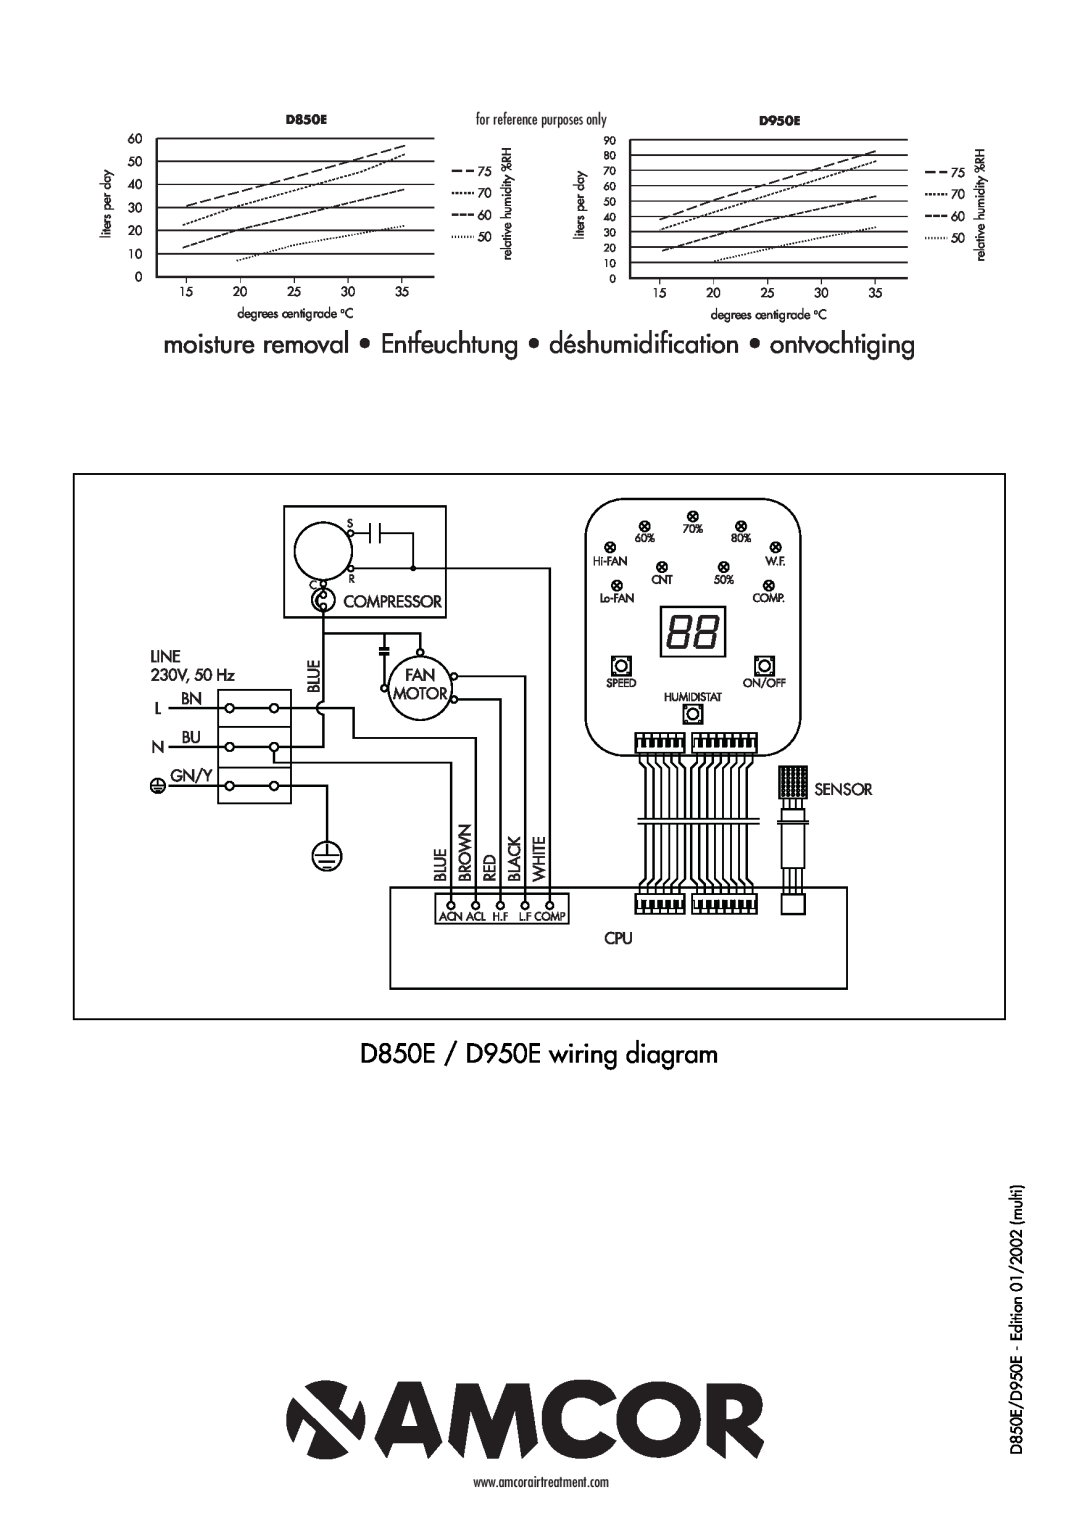 Amcor instruction manual for reference purposes only, Sensor, D850E/D950E - Edition 01/2002 multi 